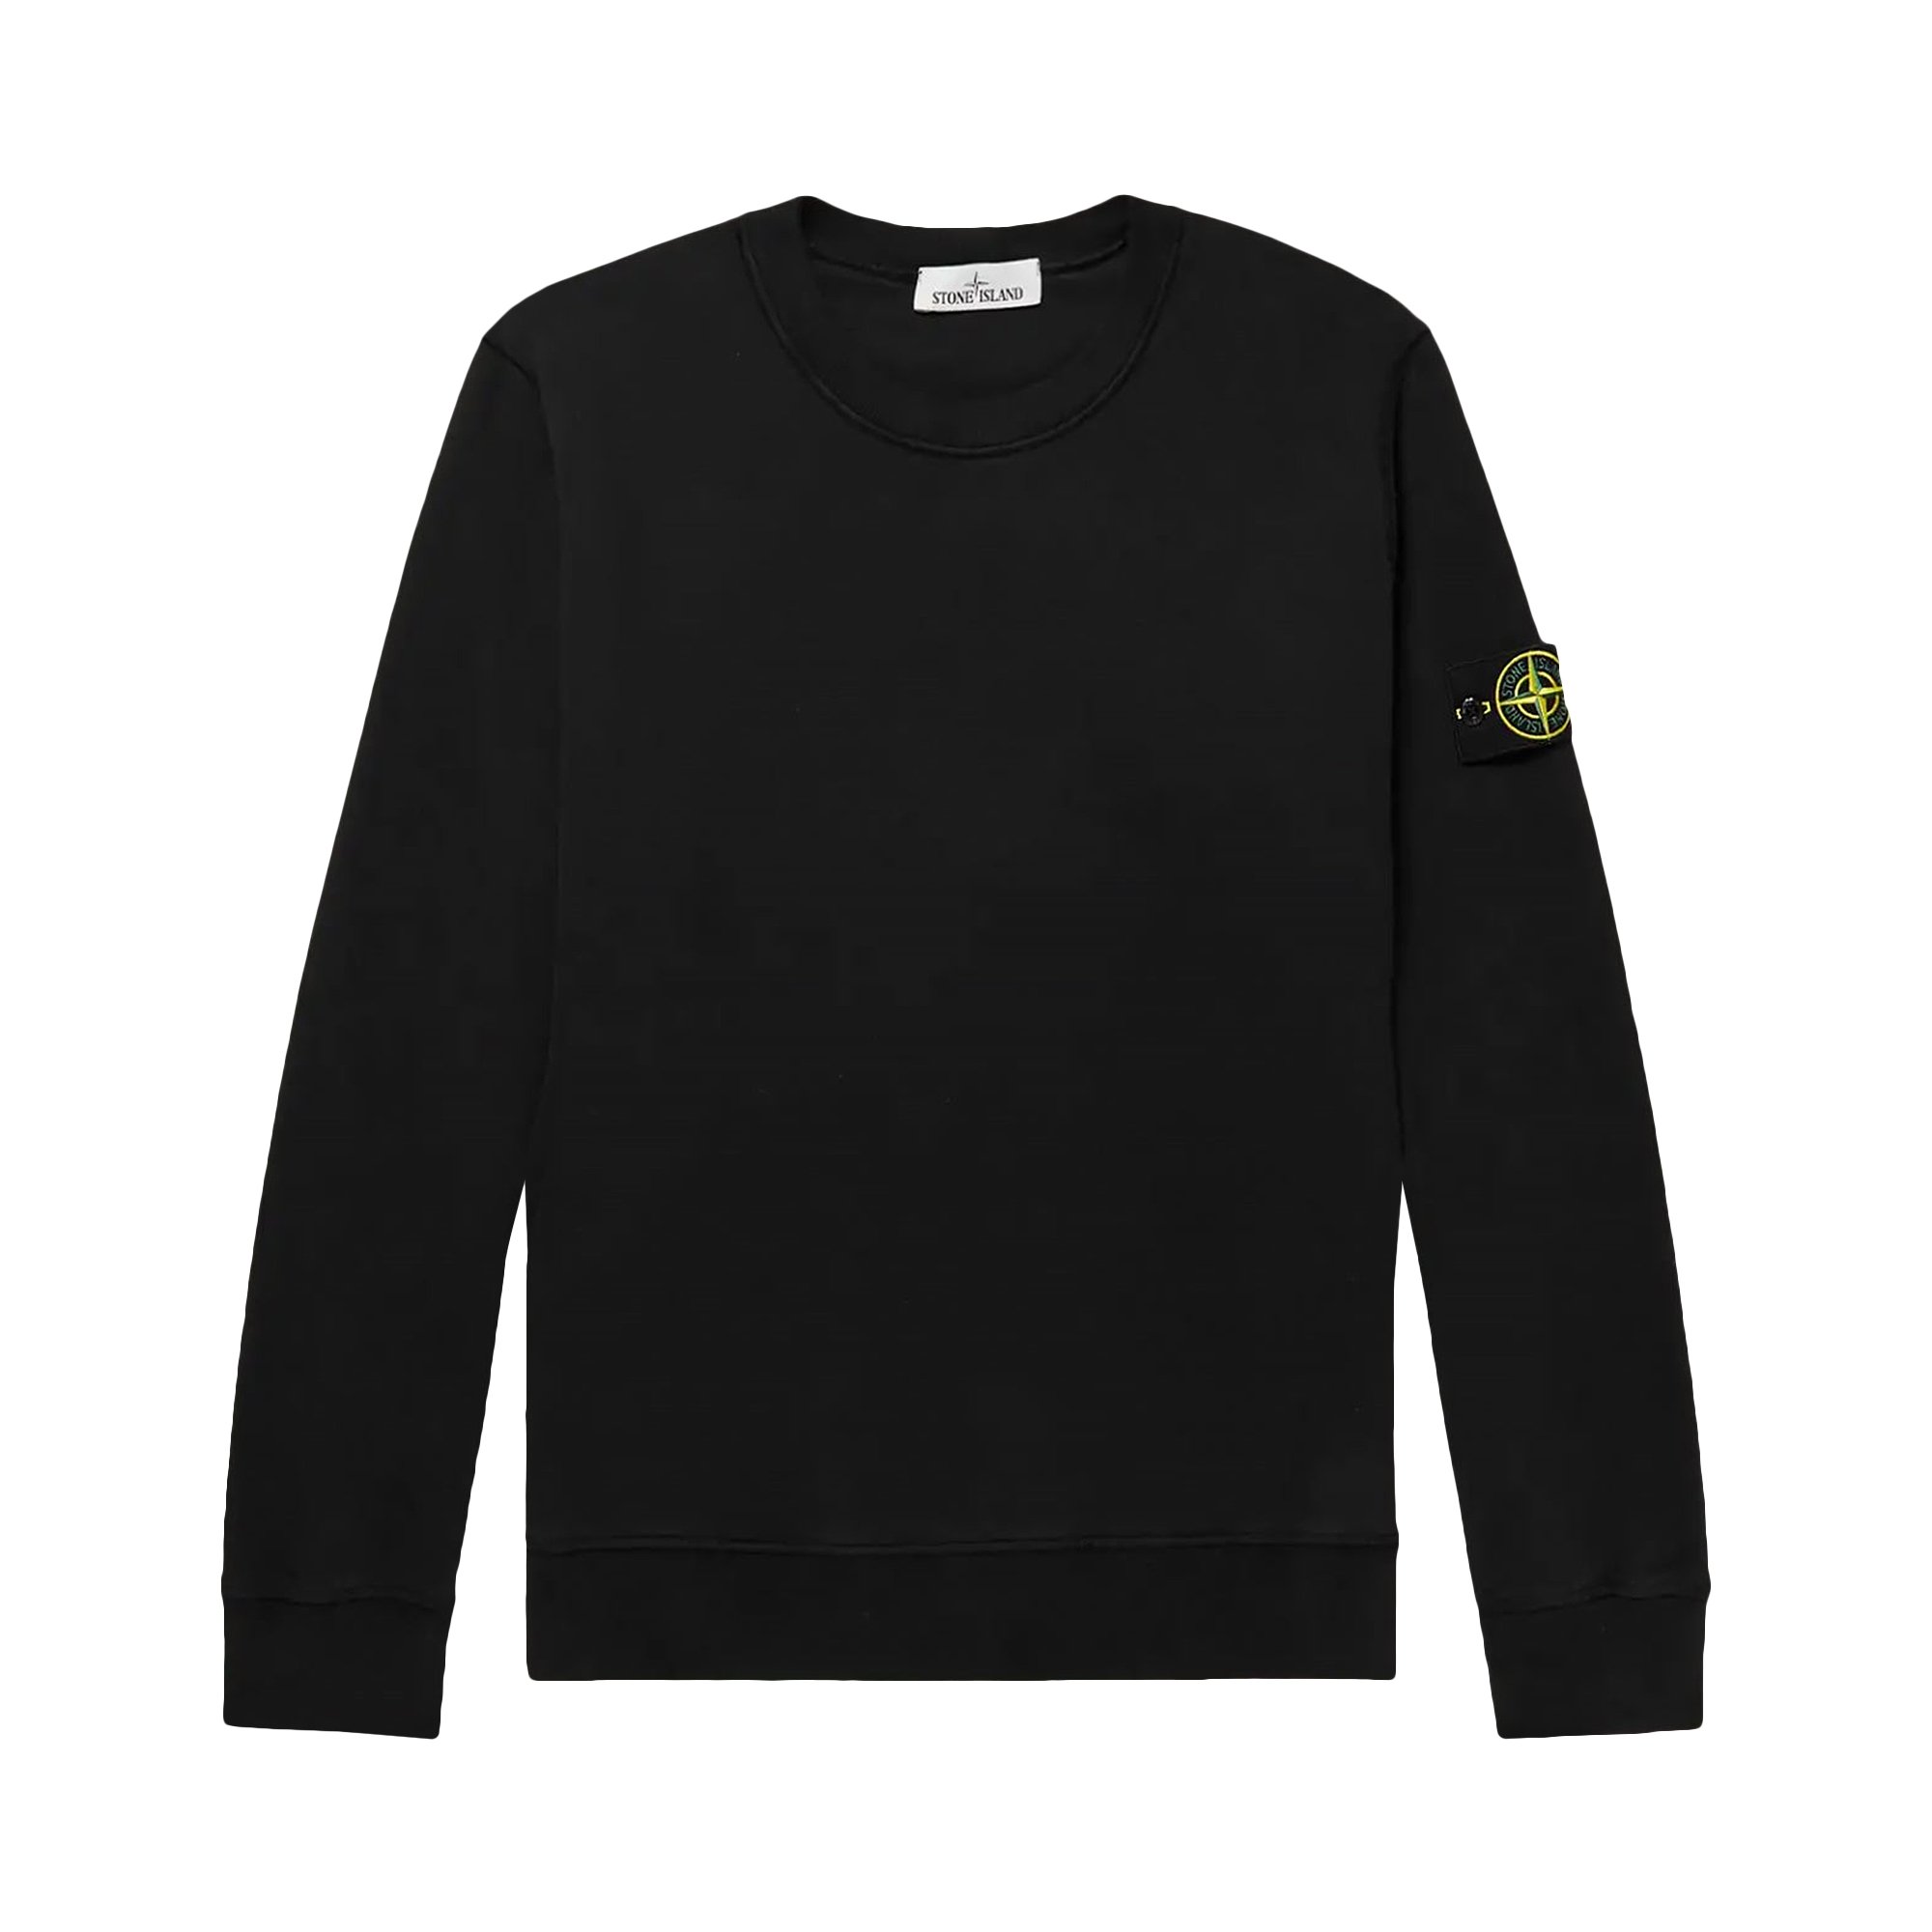 Buy Stone Island Crewneck Sweatshirt 'Black' - 761563051 V0029 | GOAT